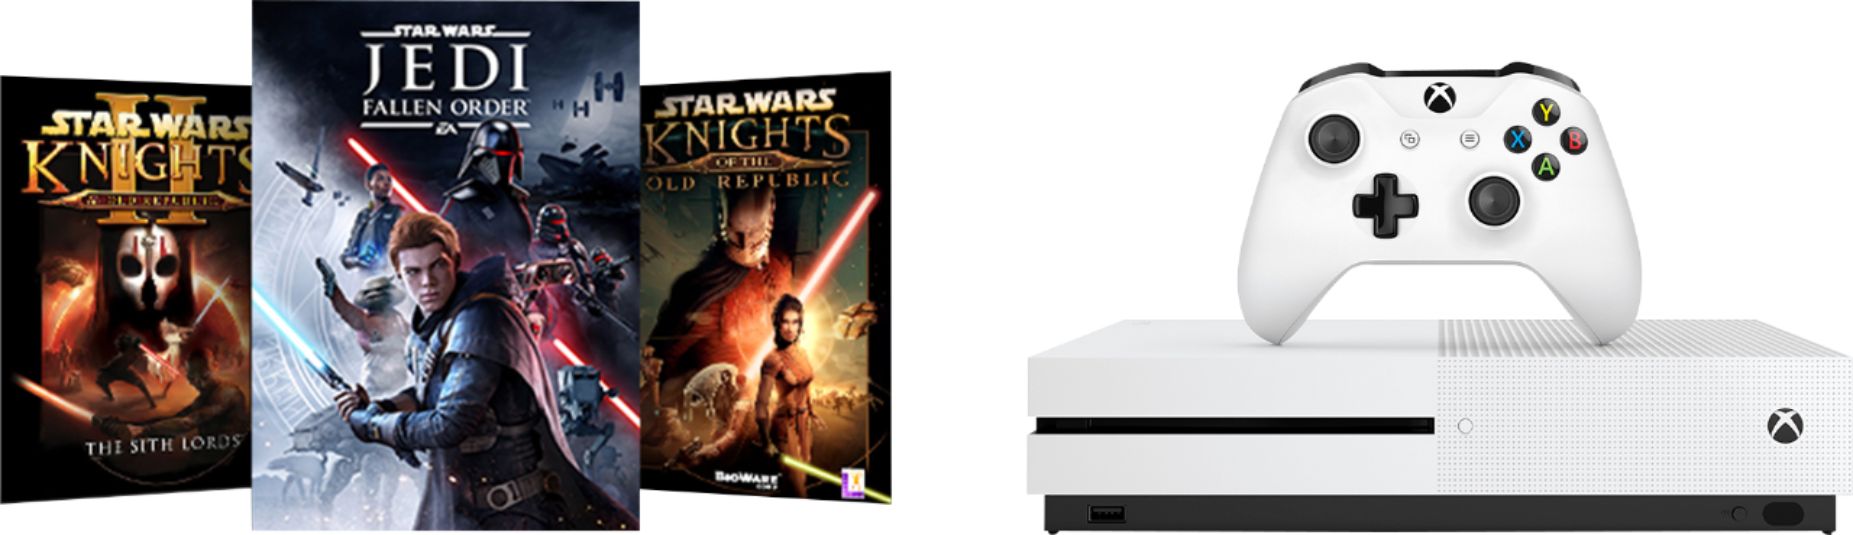 Buy STAR WARS Jedi: Fallen Order™ Deluxe Edition